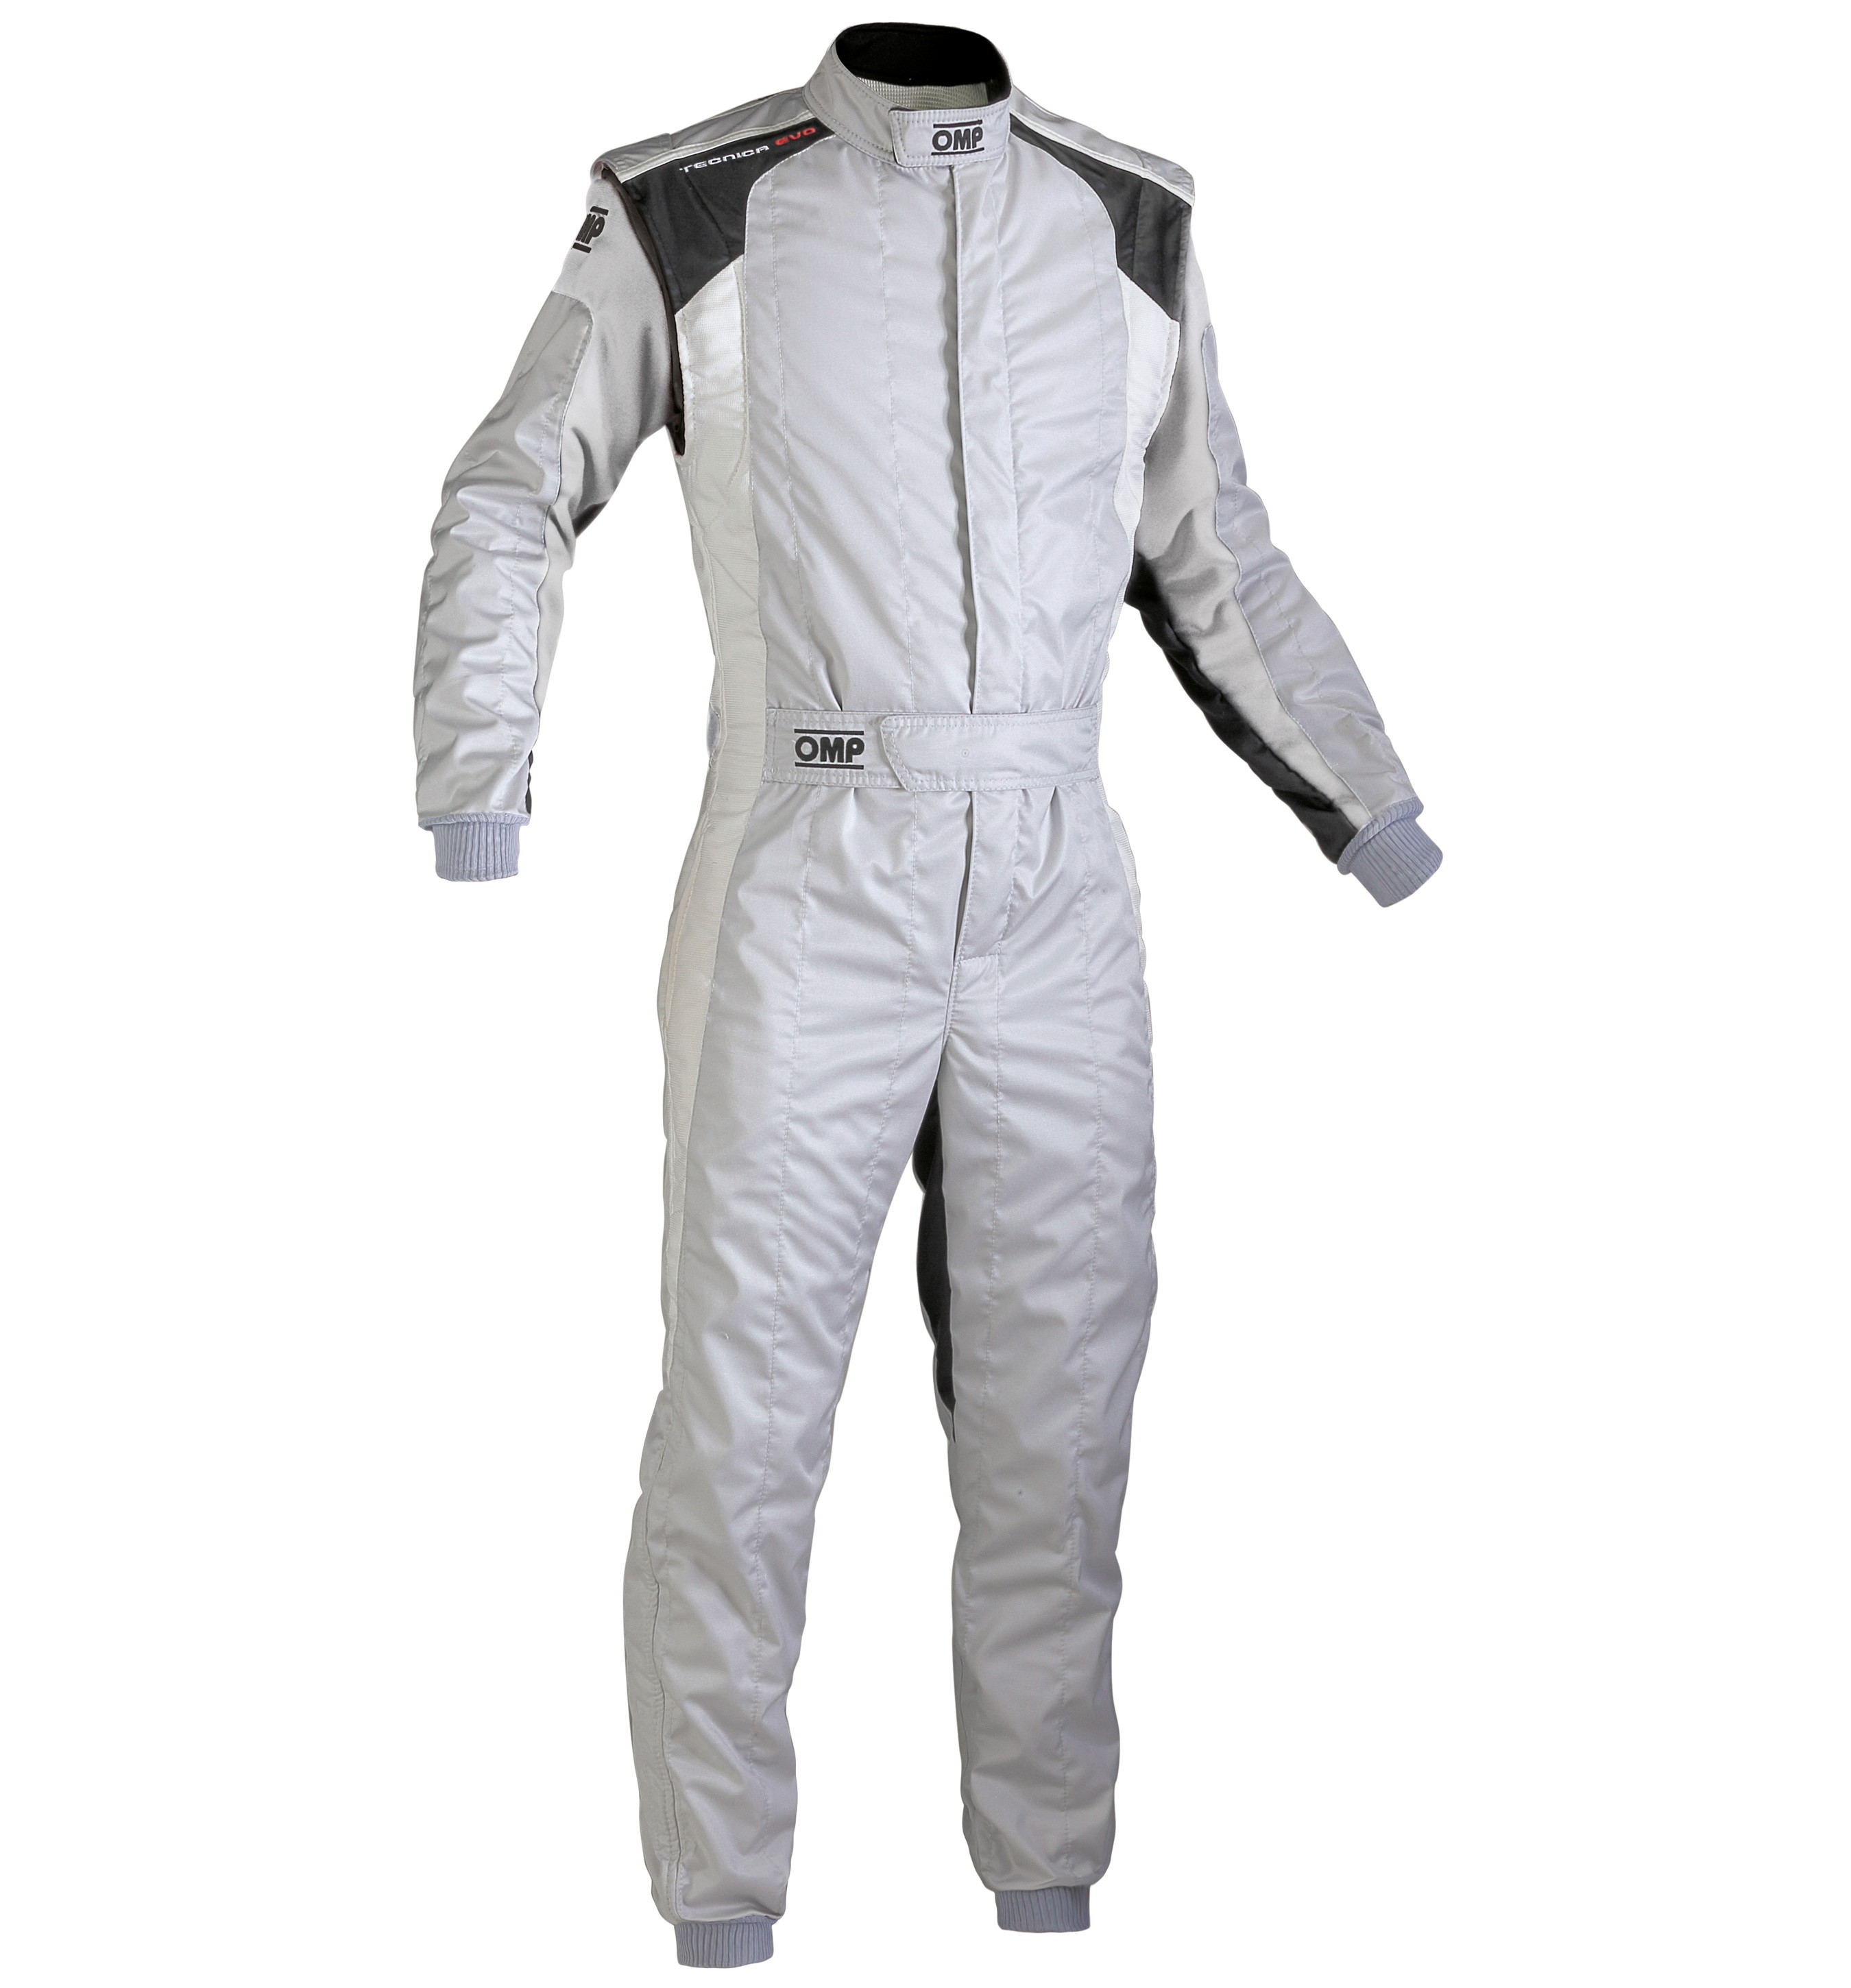 IA0184407658 Tecnica Evo Racing Suit, Black/White, Size 58 OMP